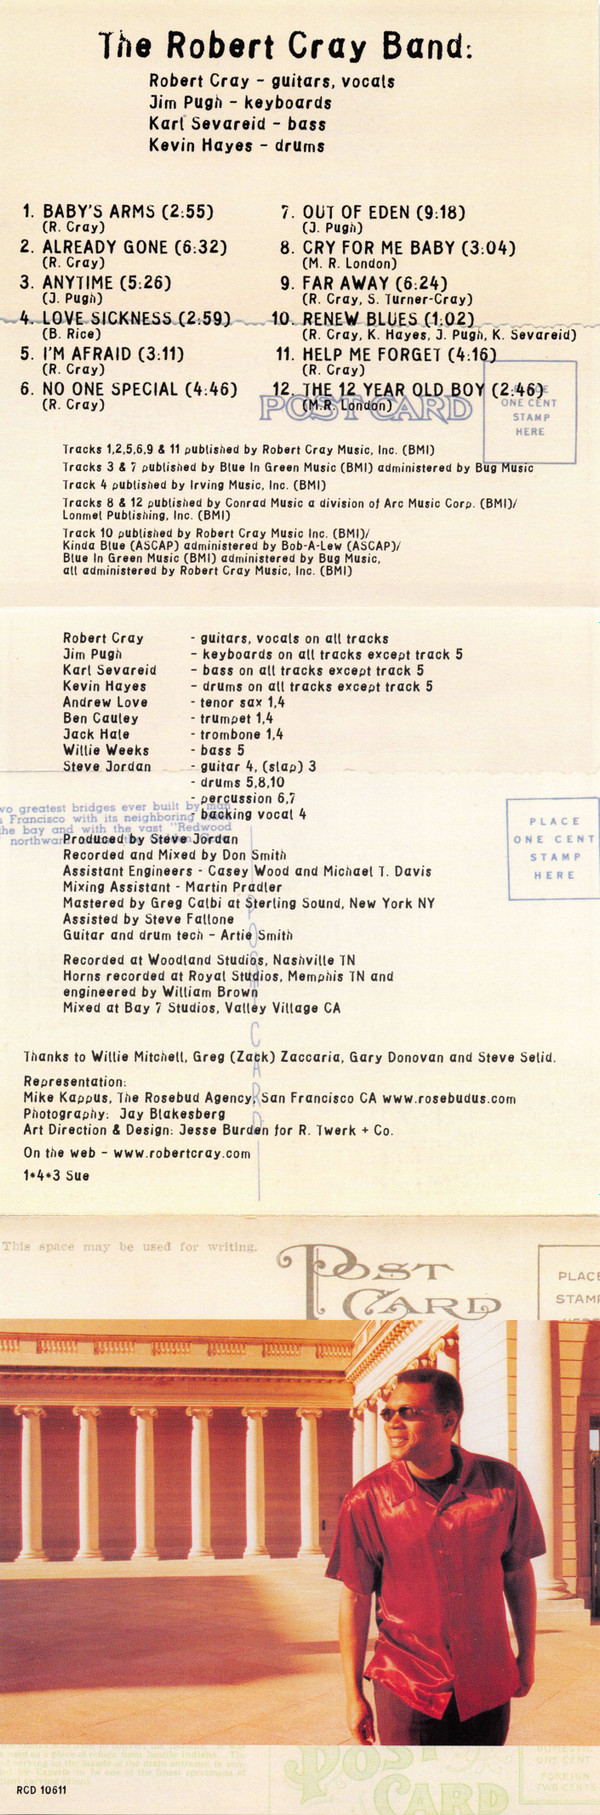 lataa albumi Robert Cray - Shoulda Been Home